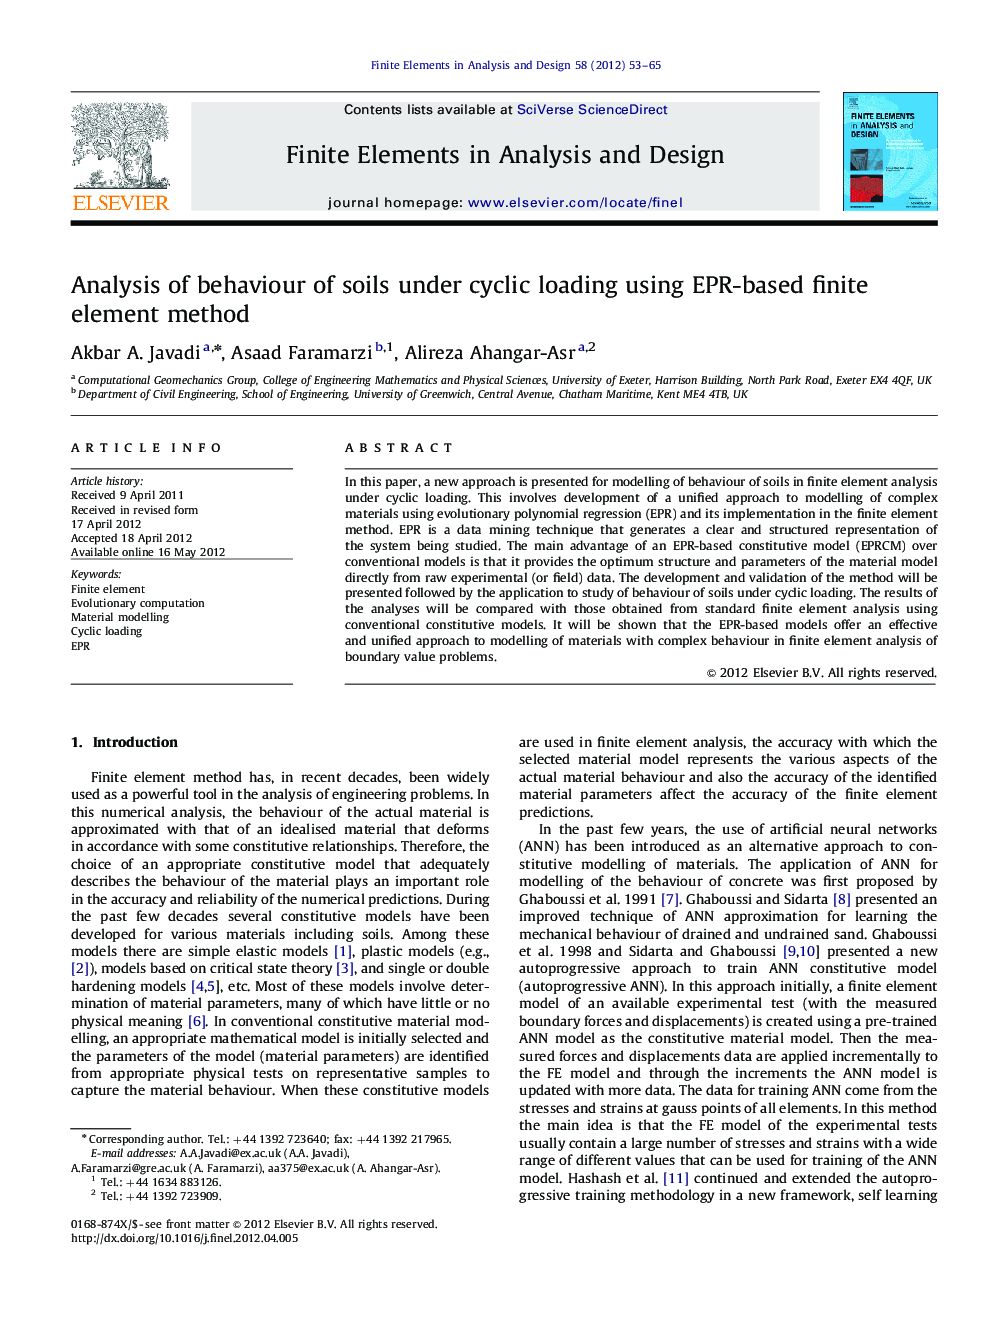 Analysis of behaviour of soils under cyclic loading using EPR-based finite element method